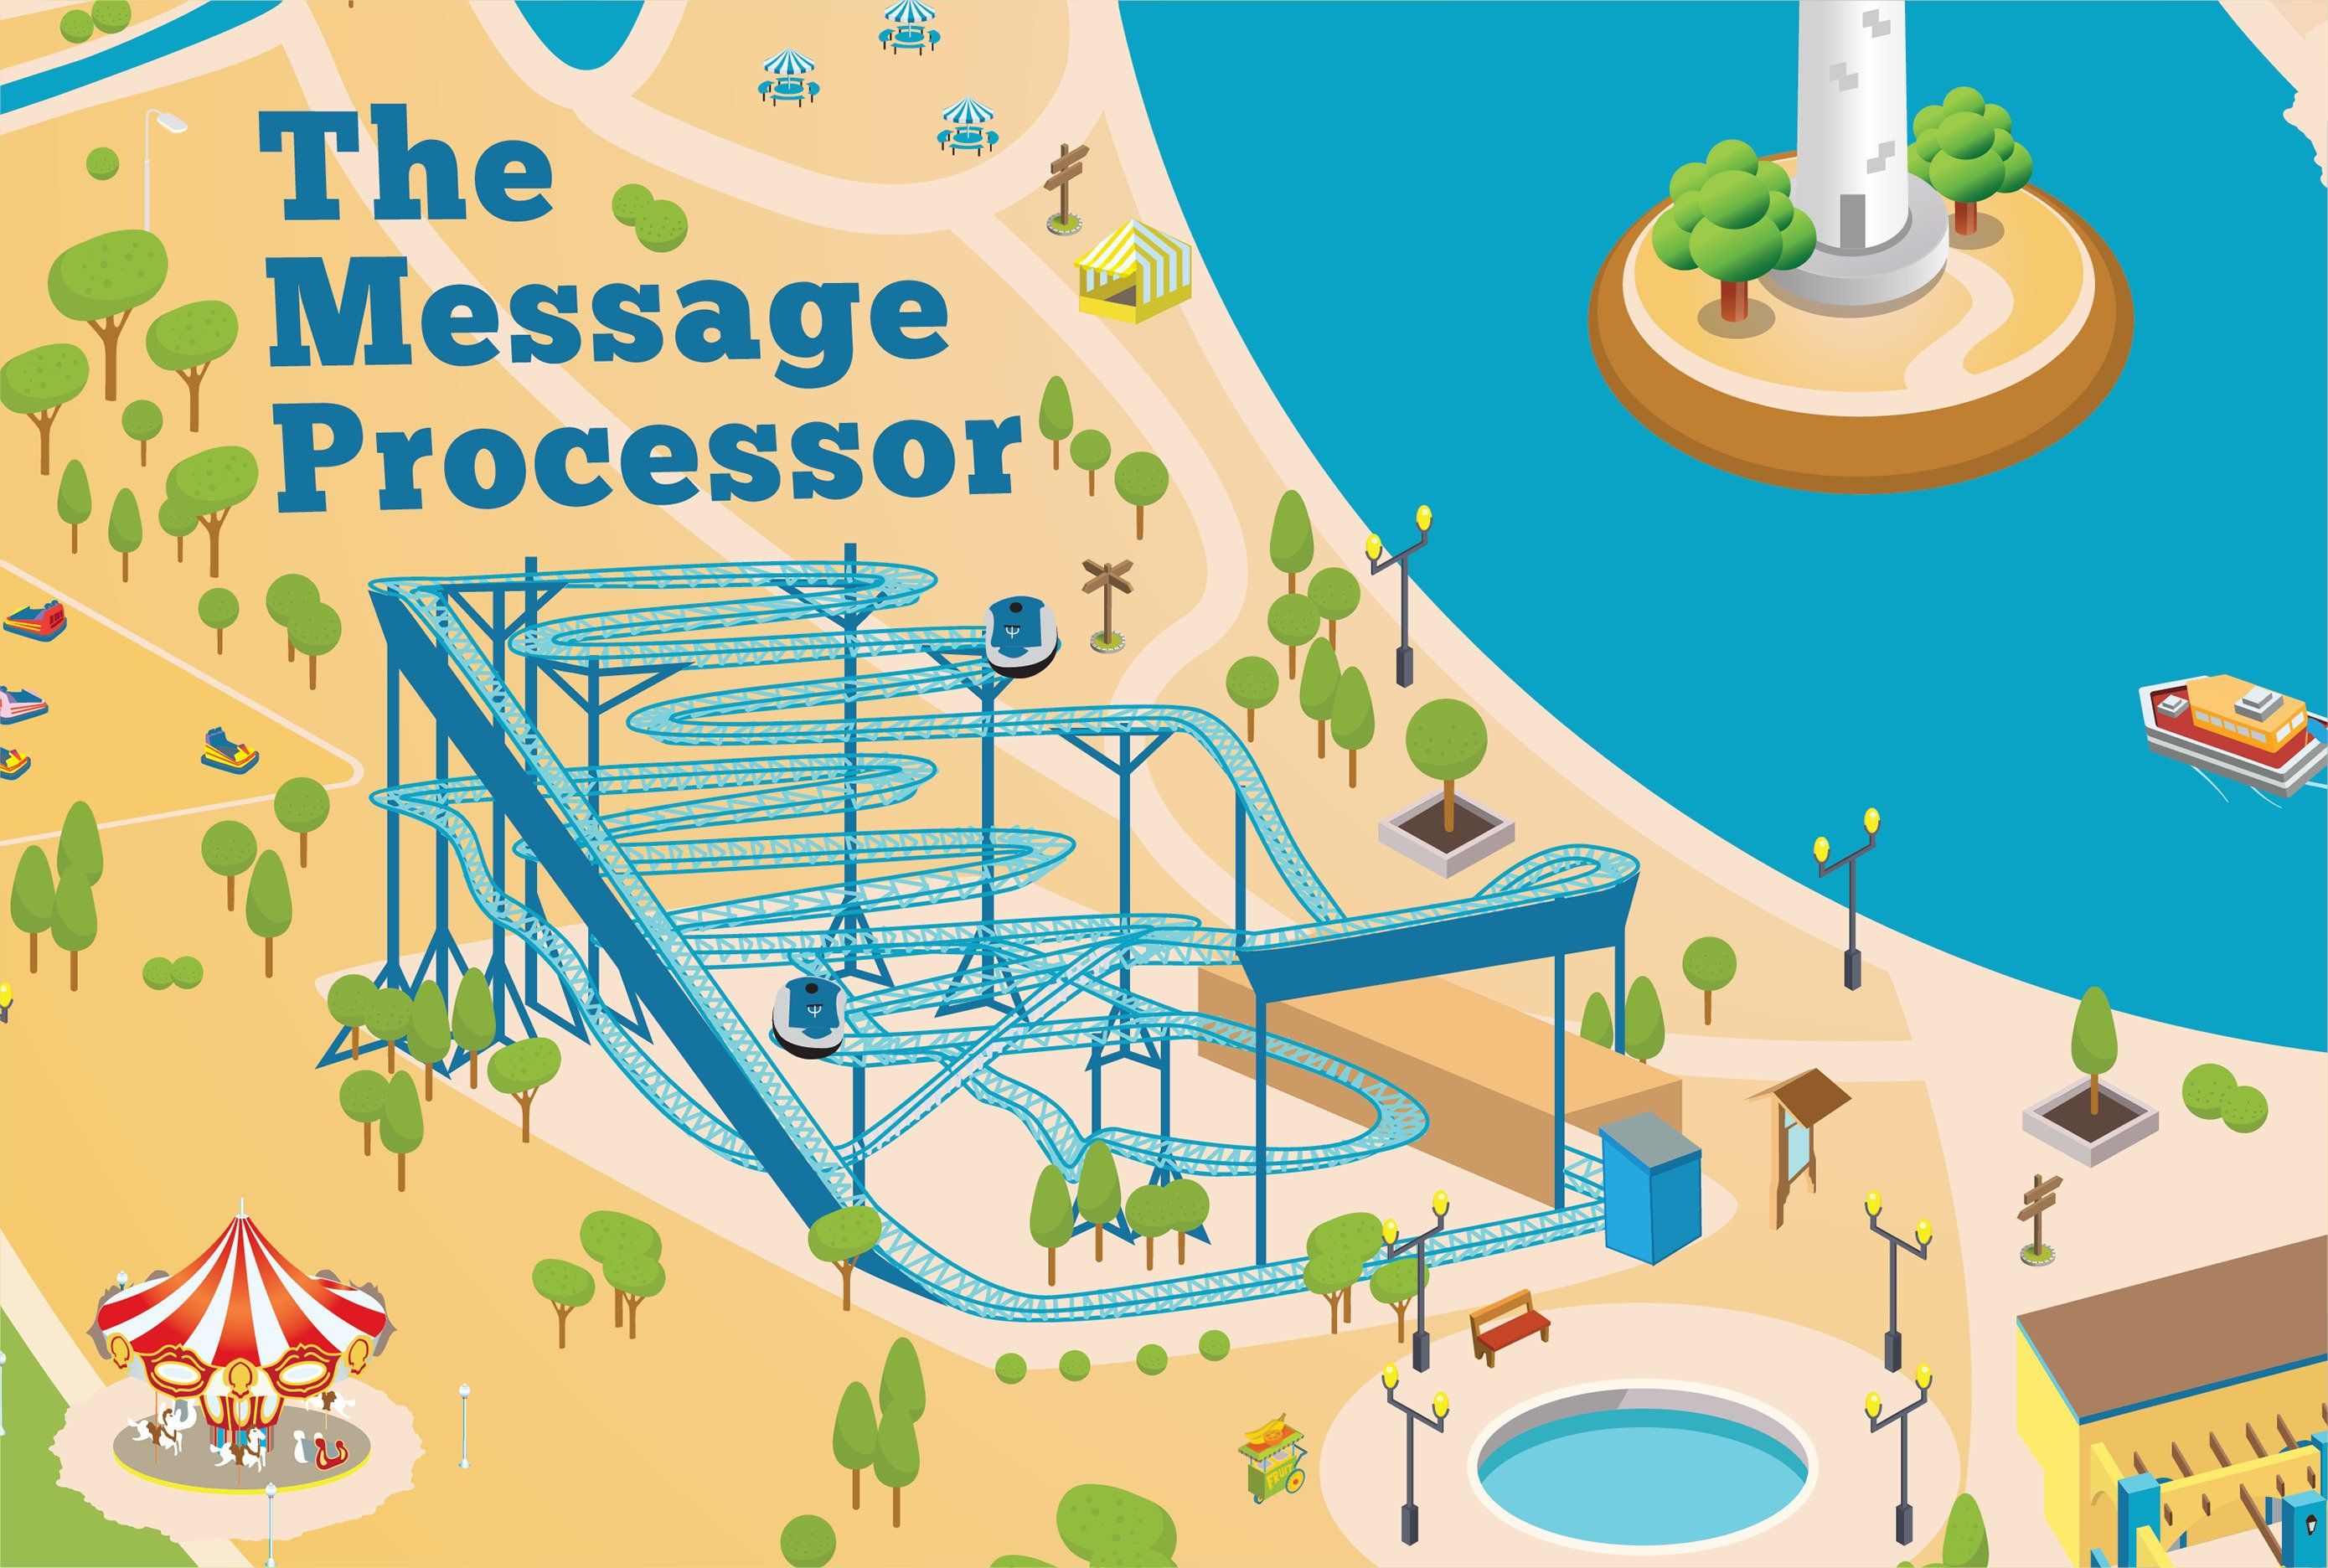 The Message Processor